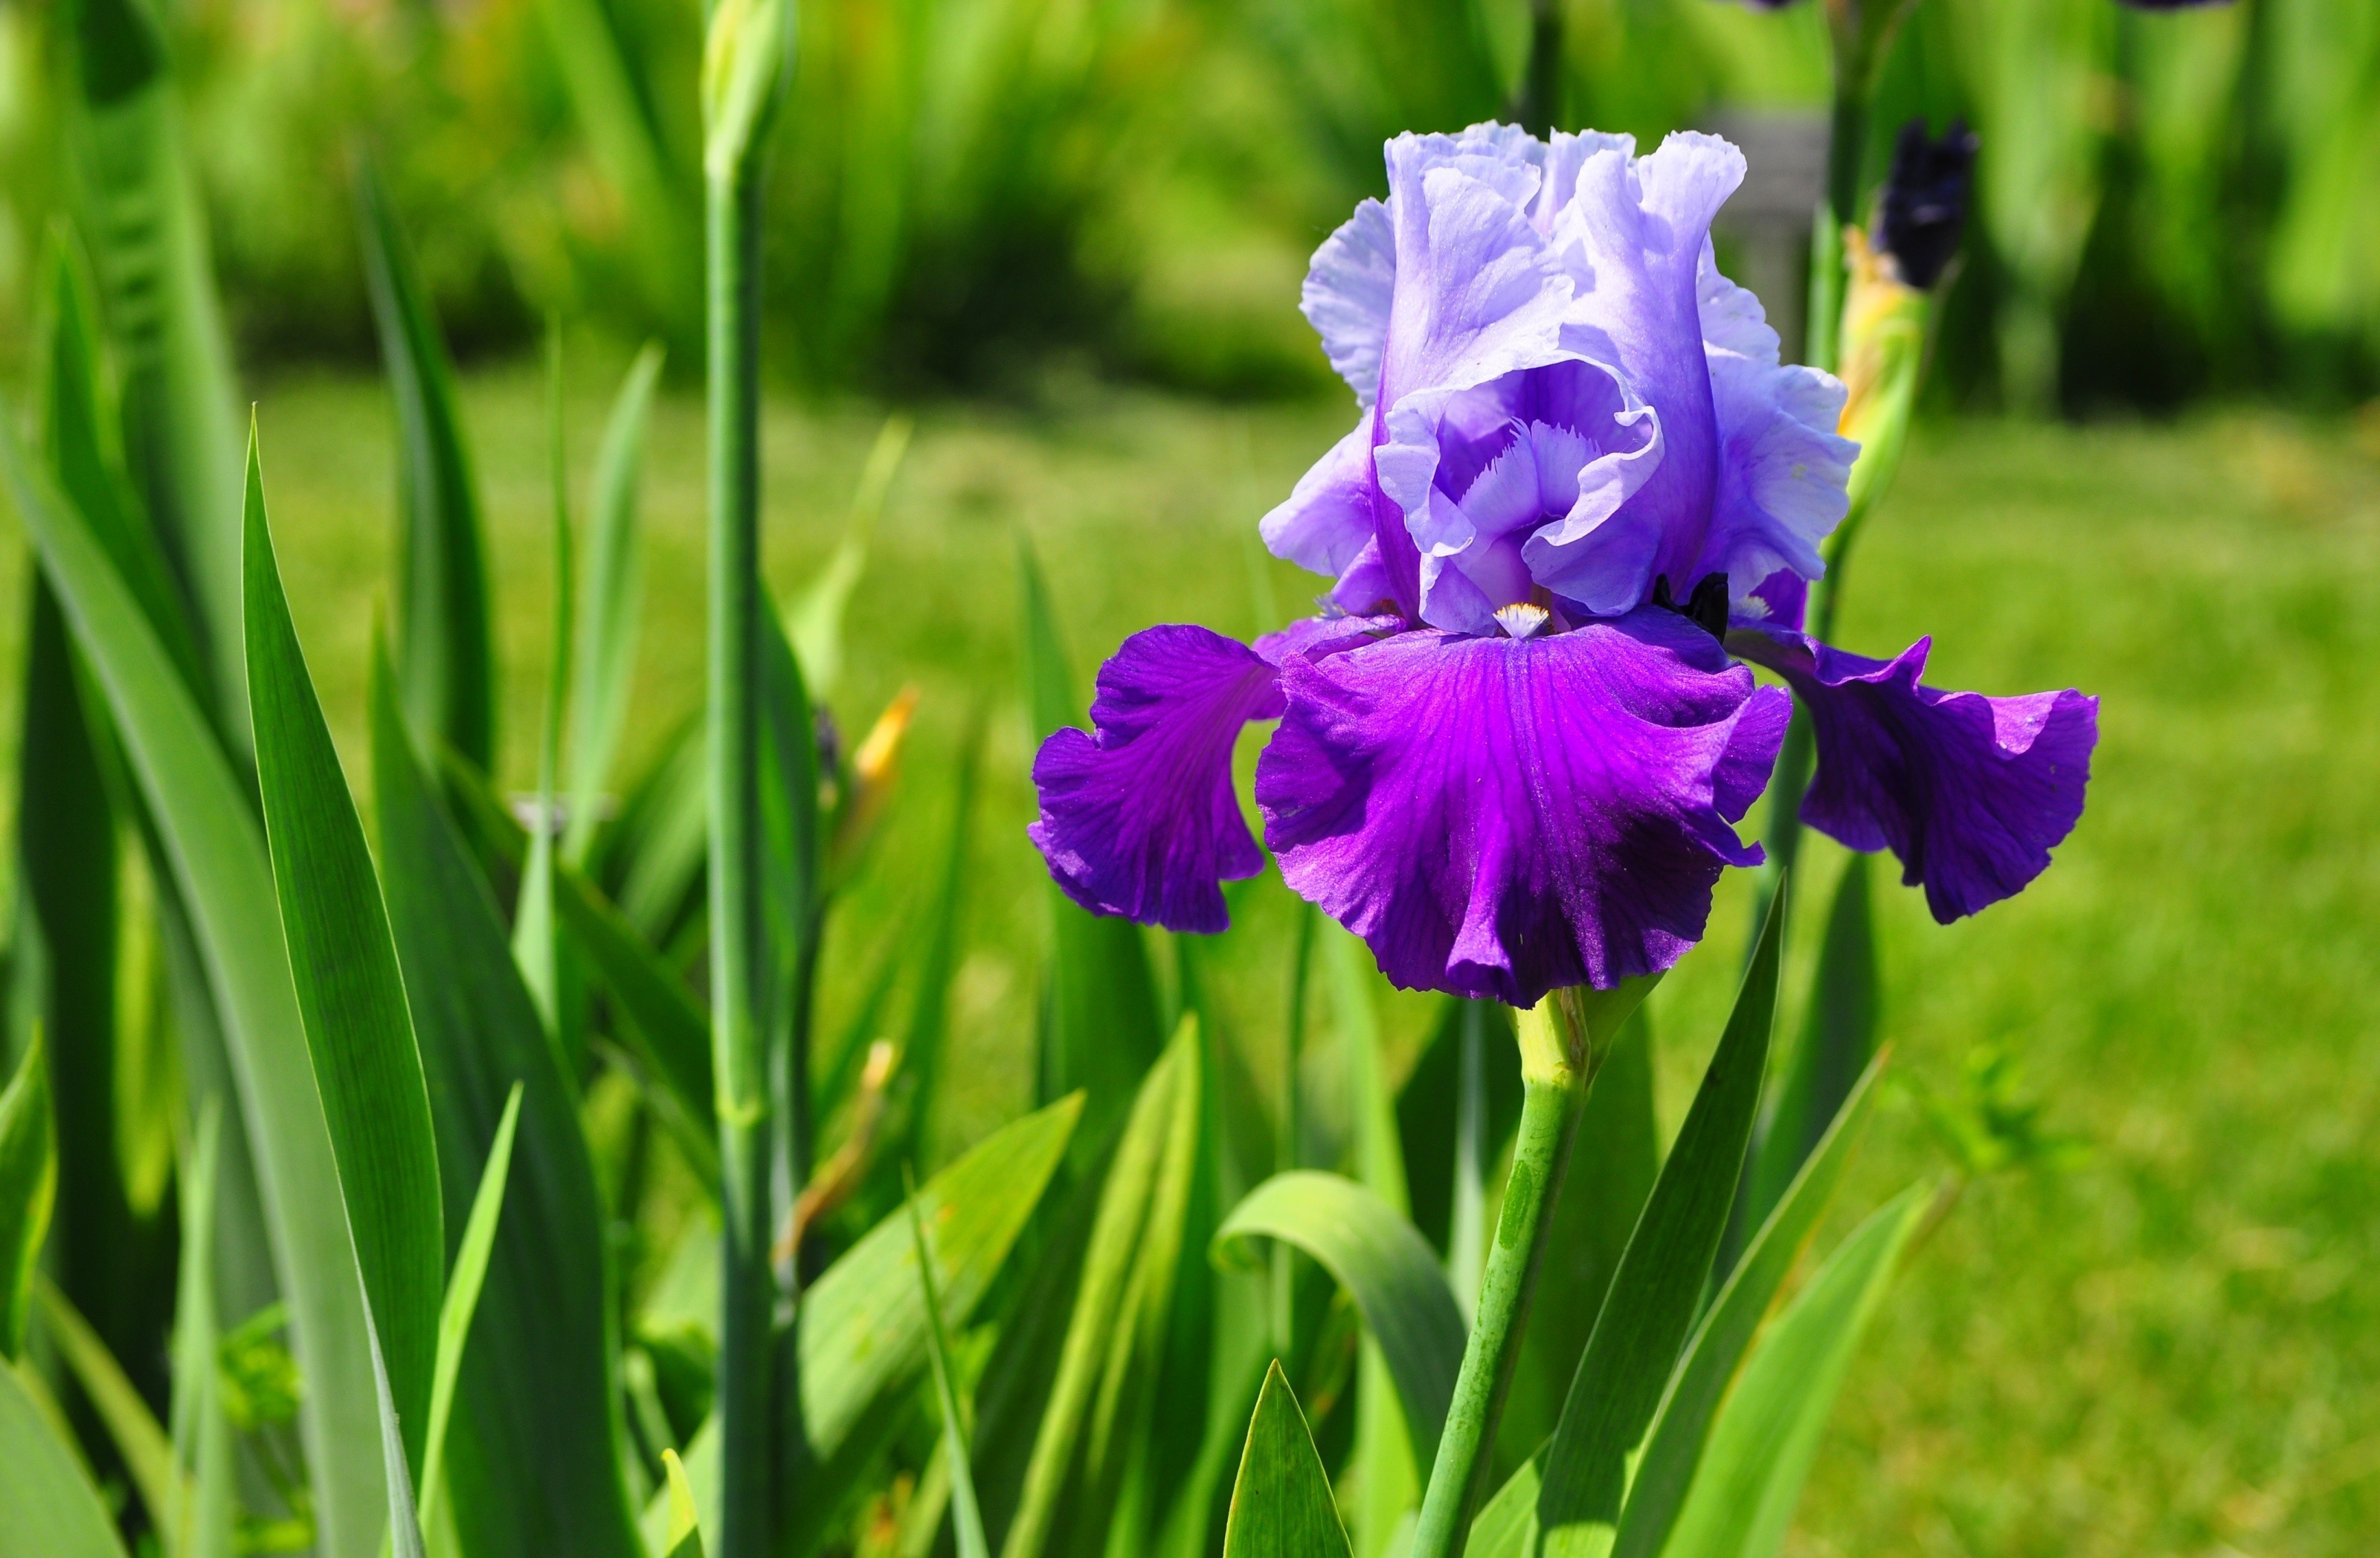 279138 descargar imagen tierra/naturaleza, iris, flor, flores: fondos de pantalla y protectores de pantalla gratis